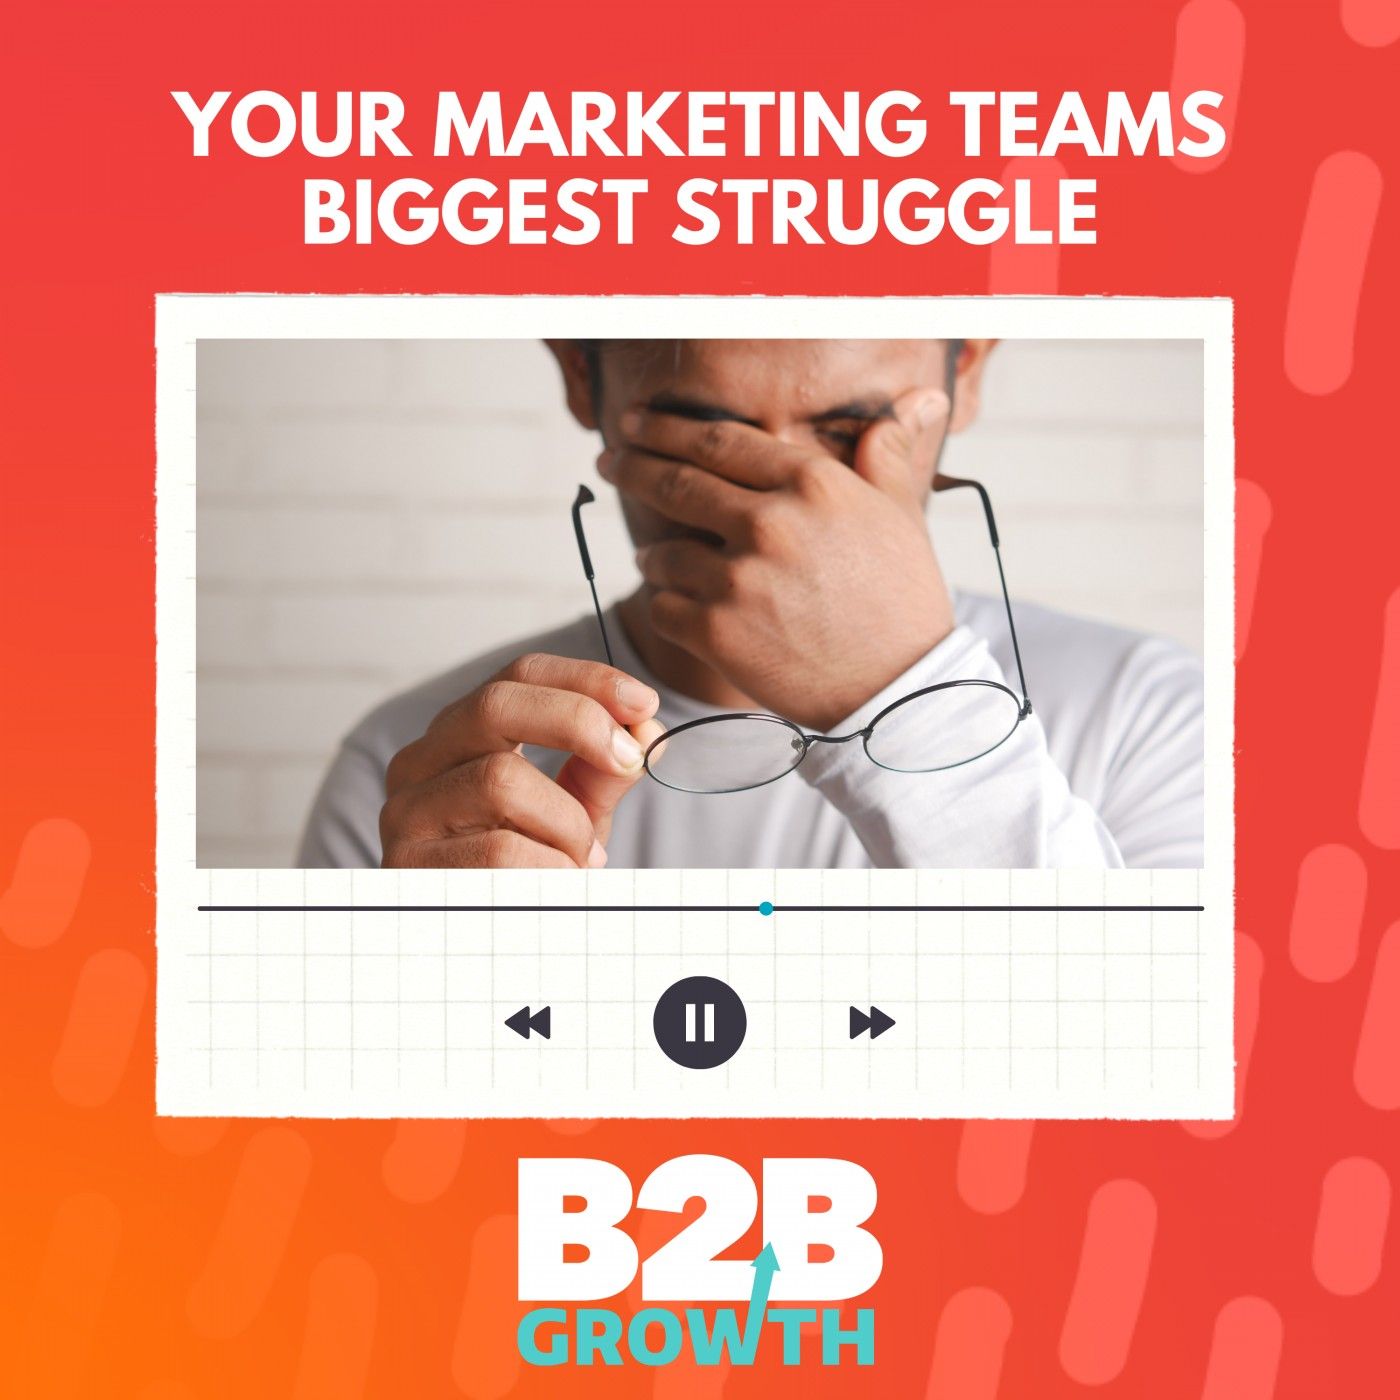 Your Marketing Teams Biggest Struggle | Original Research